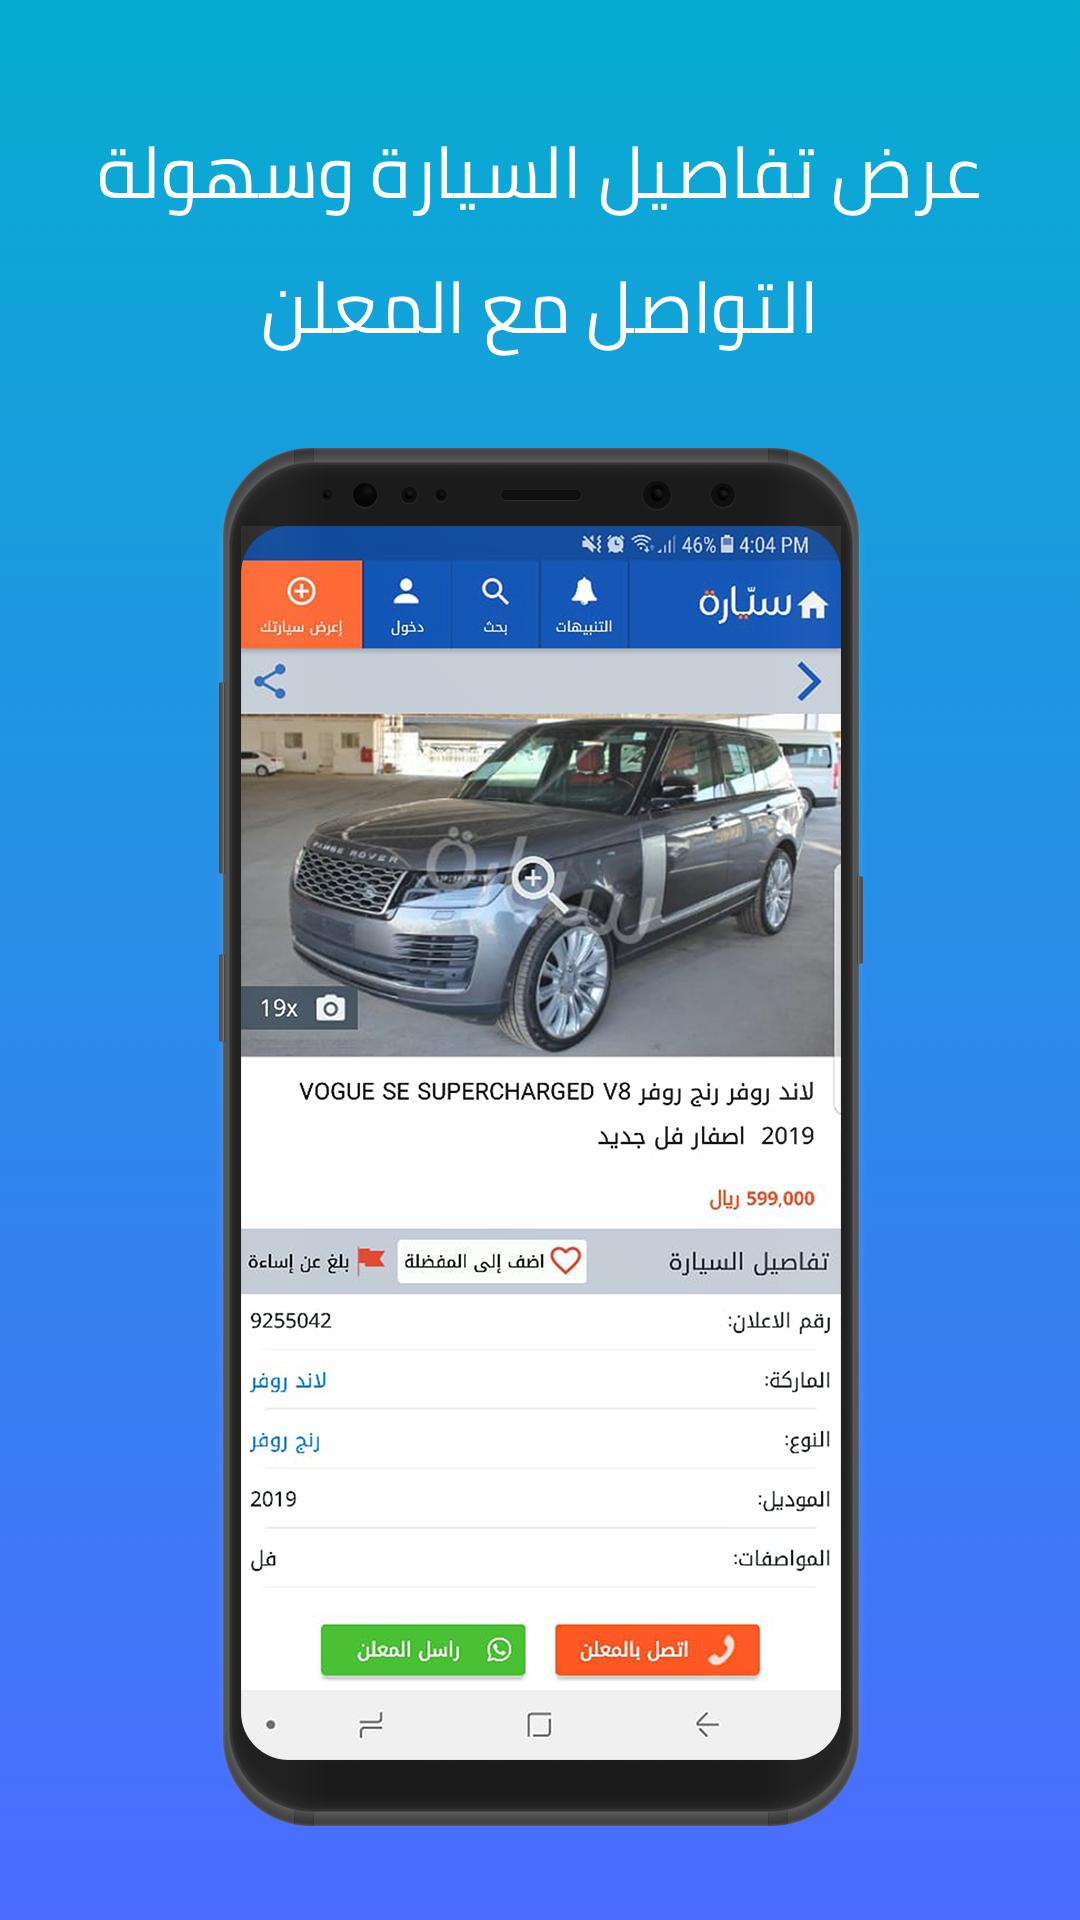 Syarah - Saudi Cars marketplace 1.10.4 Screenshot 3